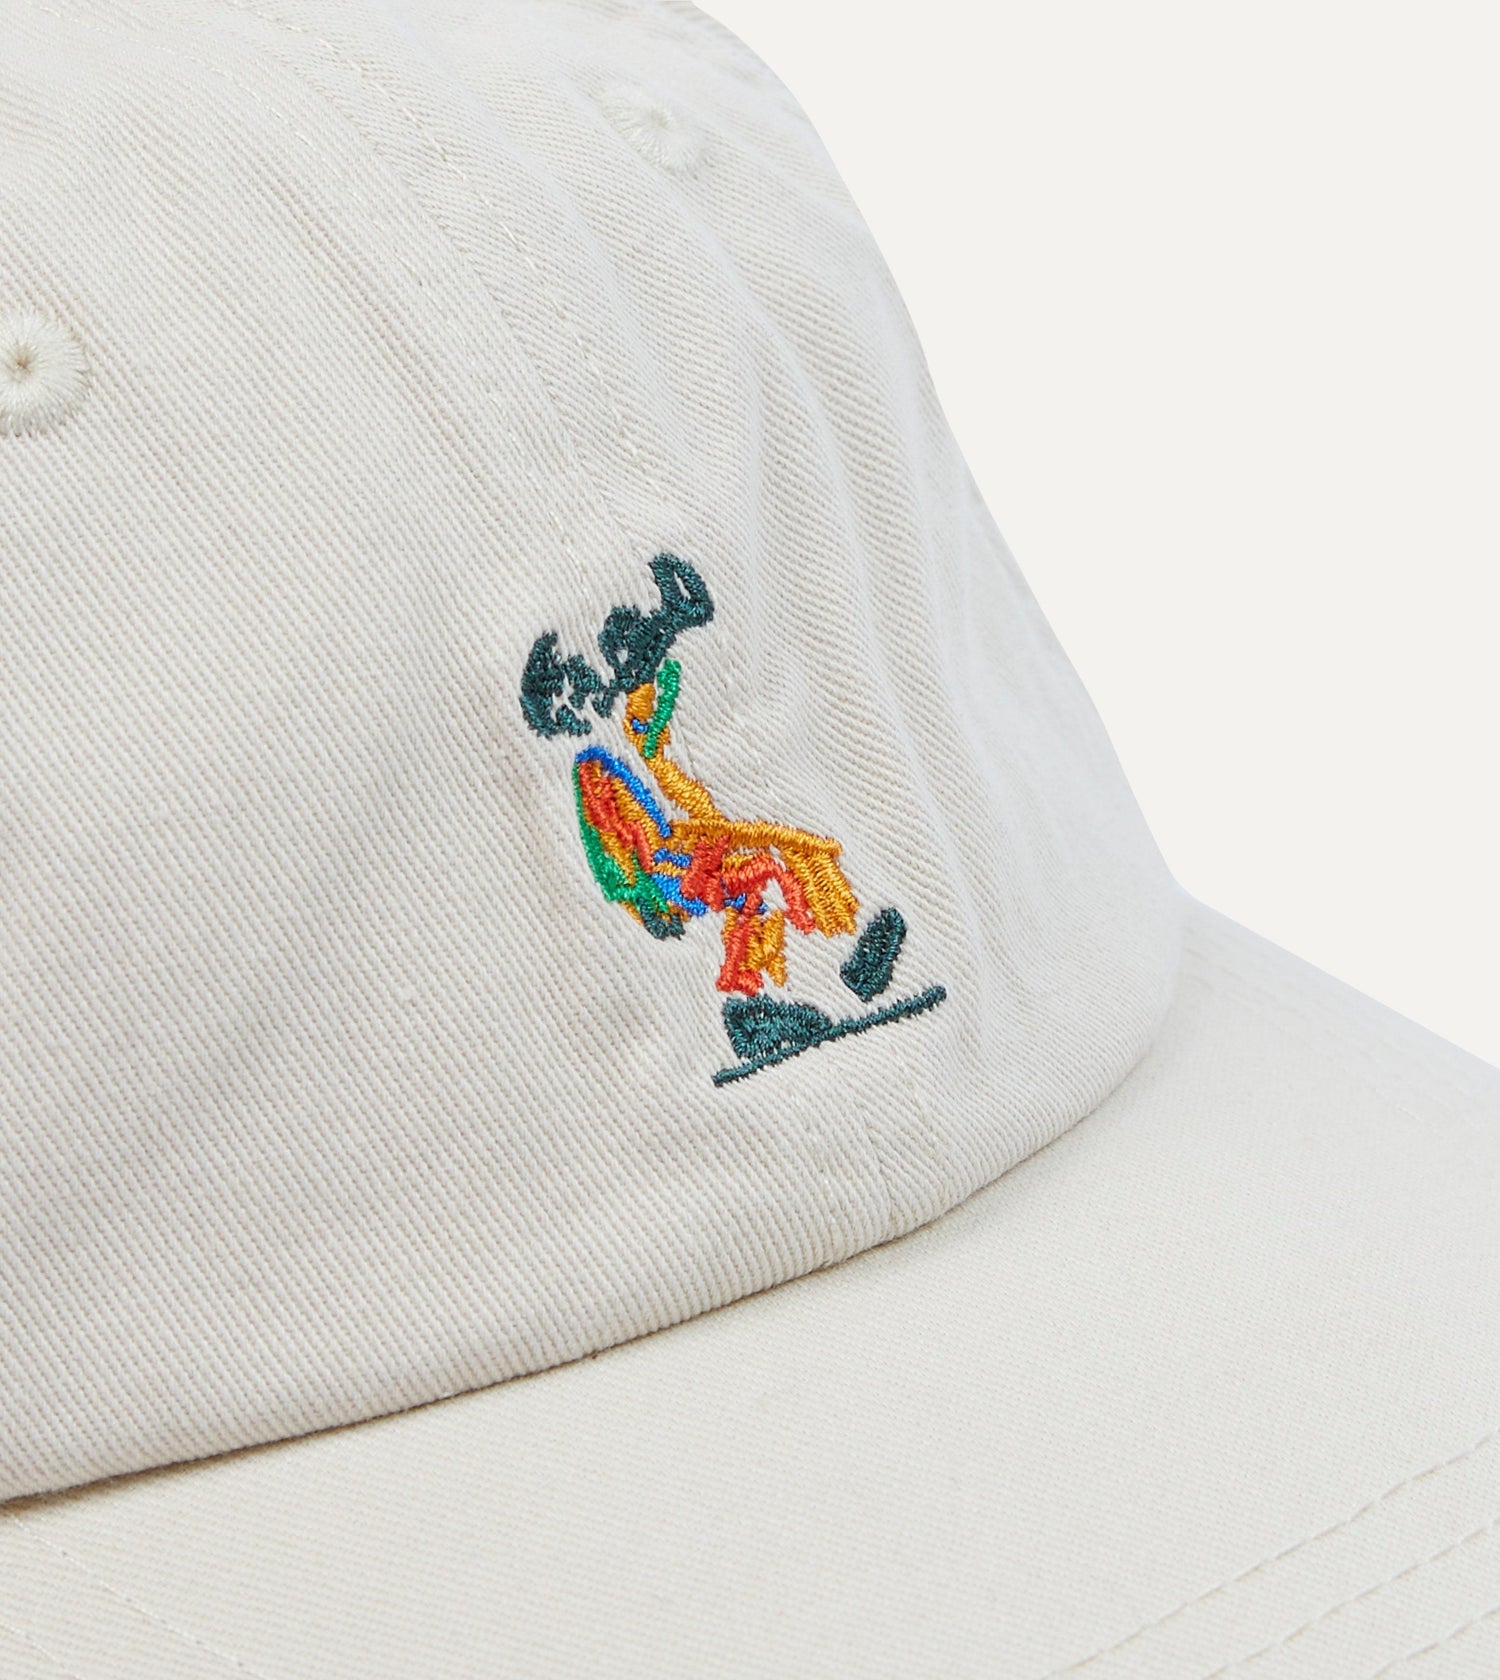 ALD / Drake's White Chino Hat